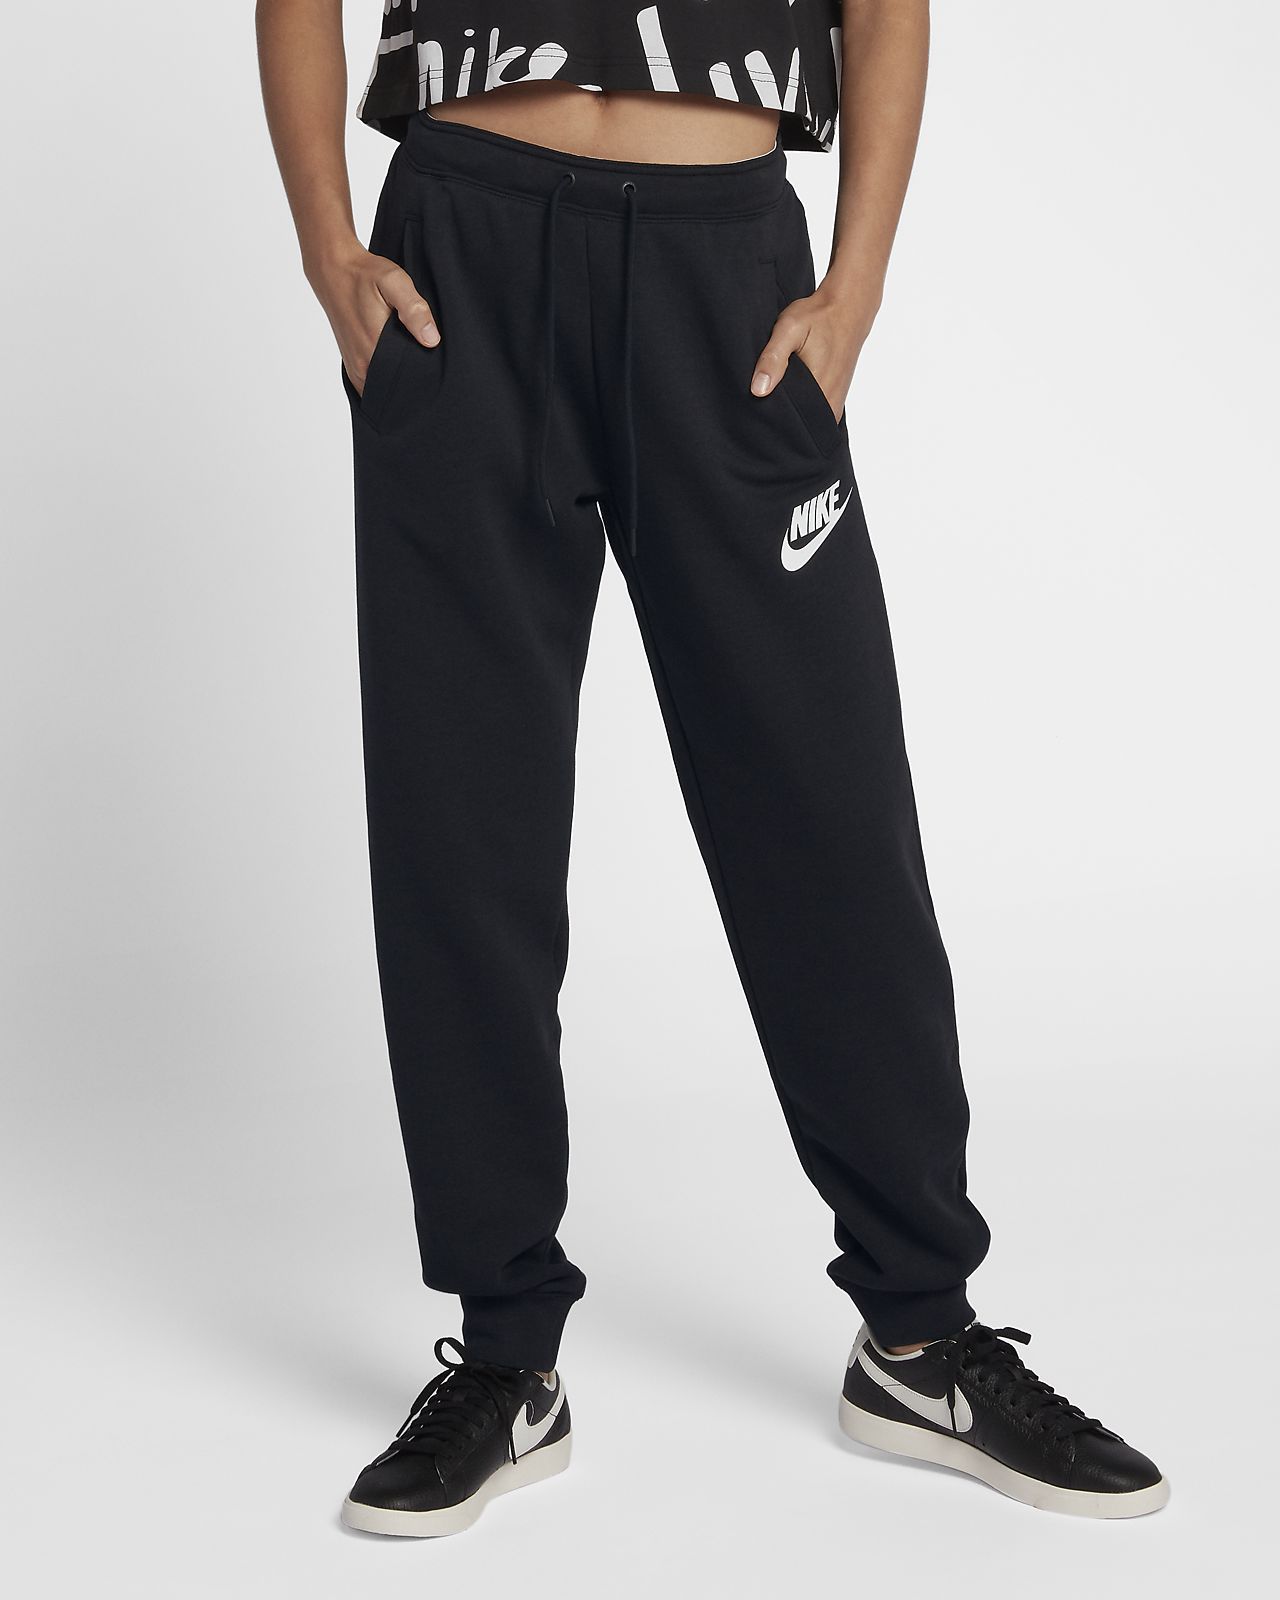 Nike Sportswear Rally Women's Pants. Nike.com | Nike (US)